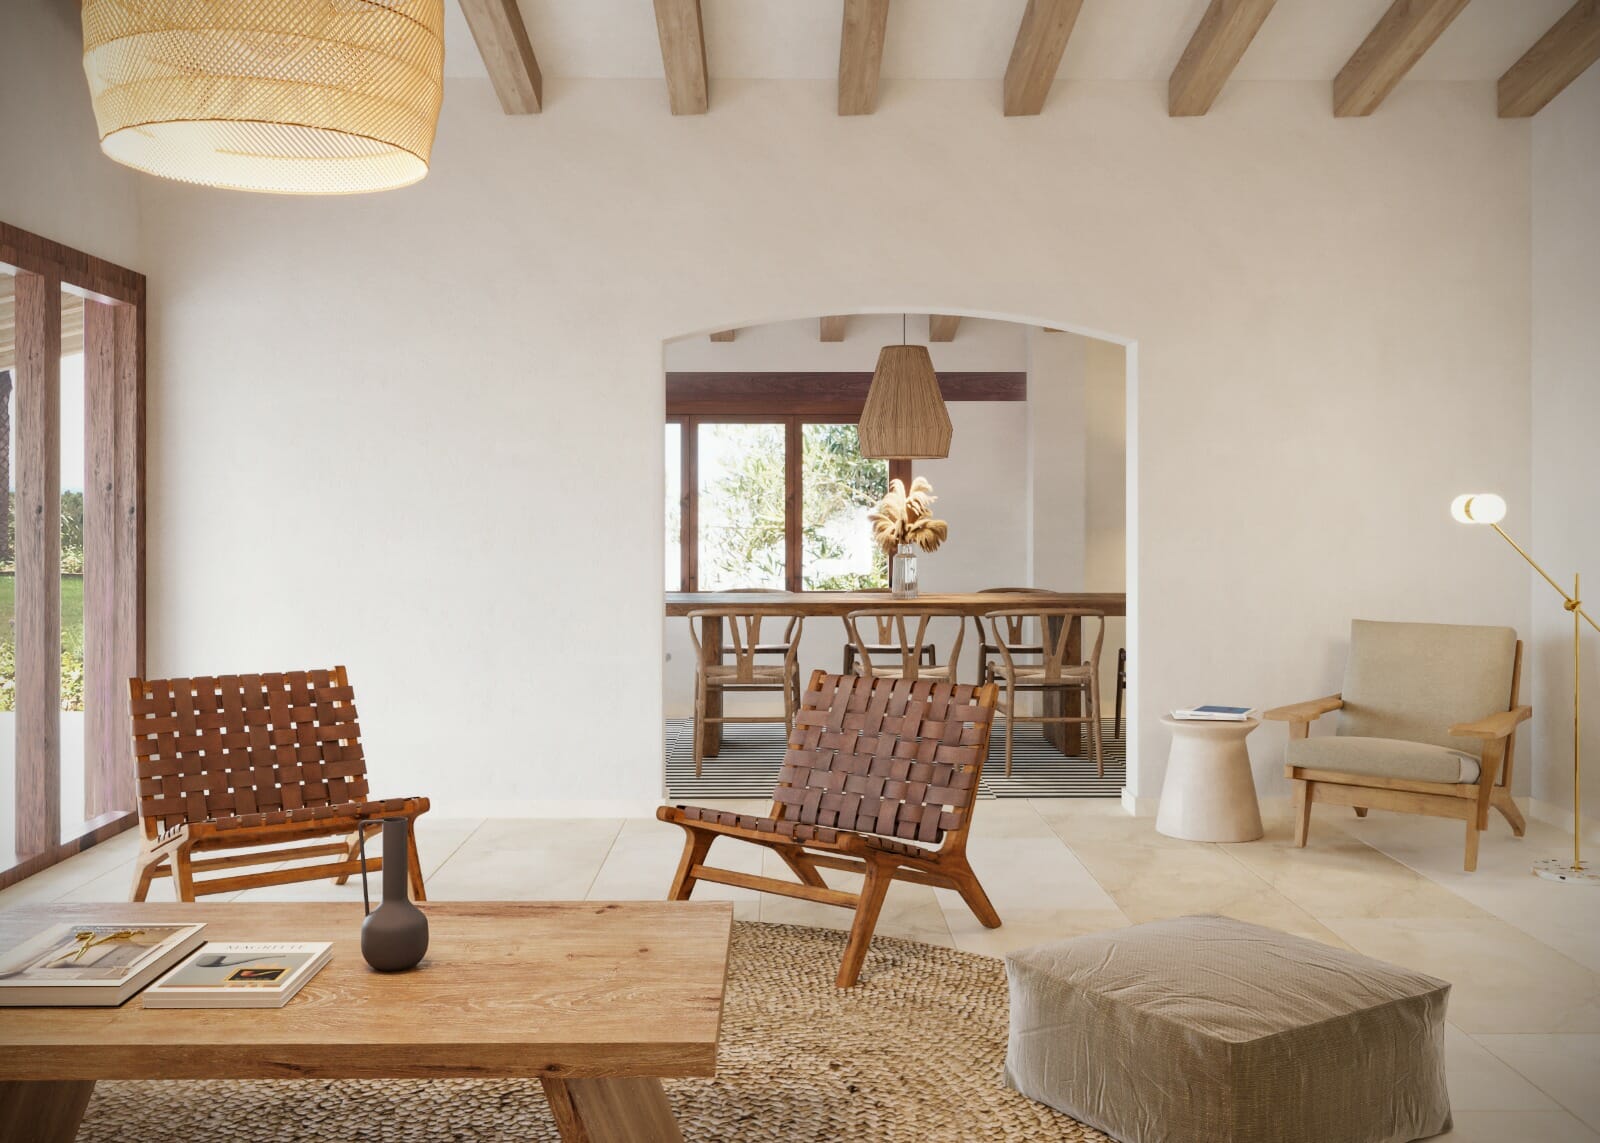 Desert modern living room interior design - Anna Y